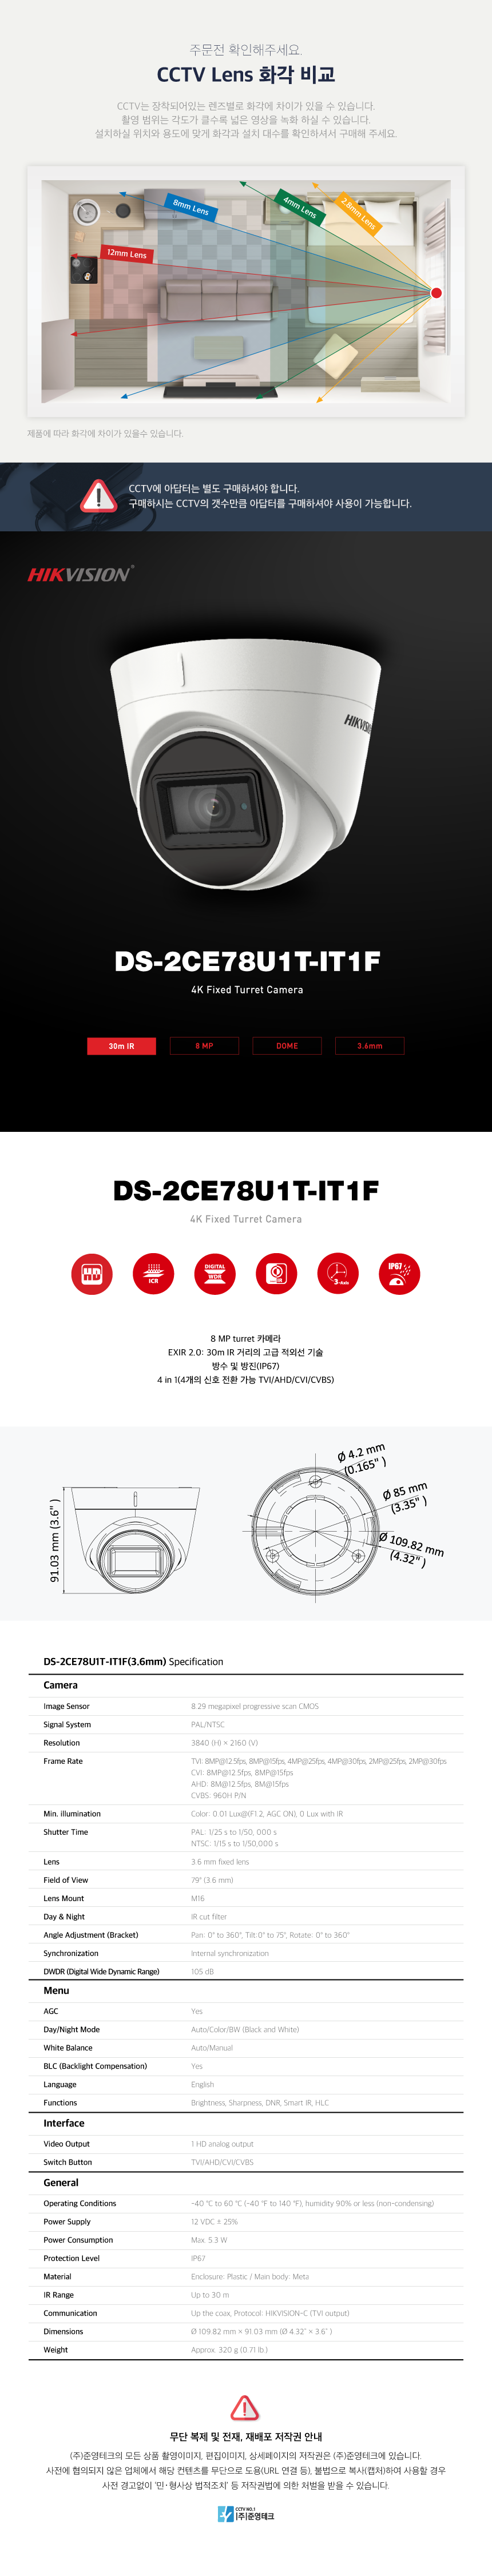 DS-2CE78U1T-IT1F_3.6mm_172848_155150.png